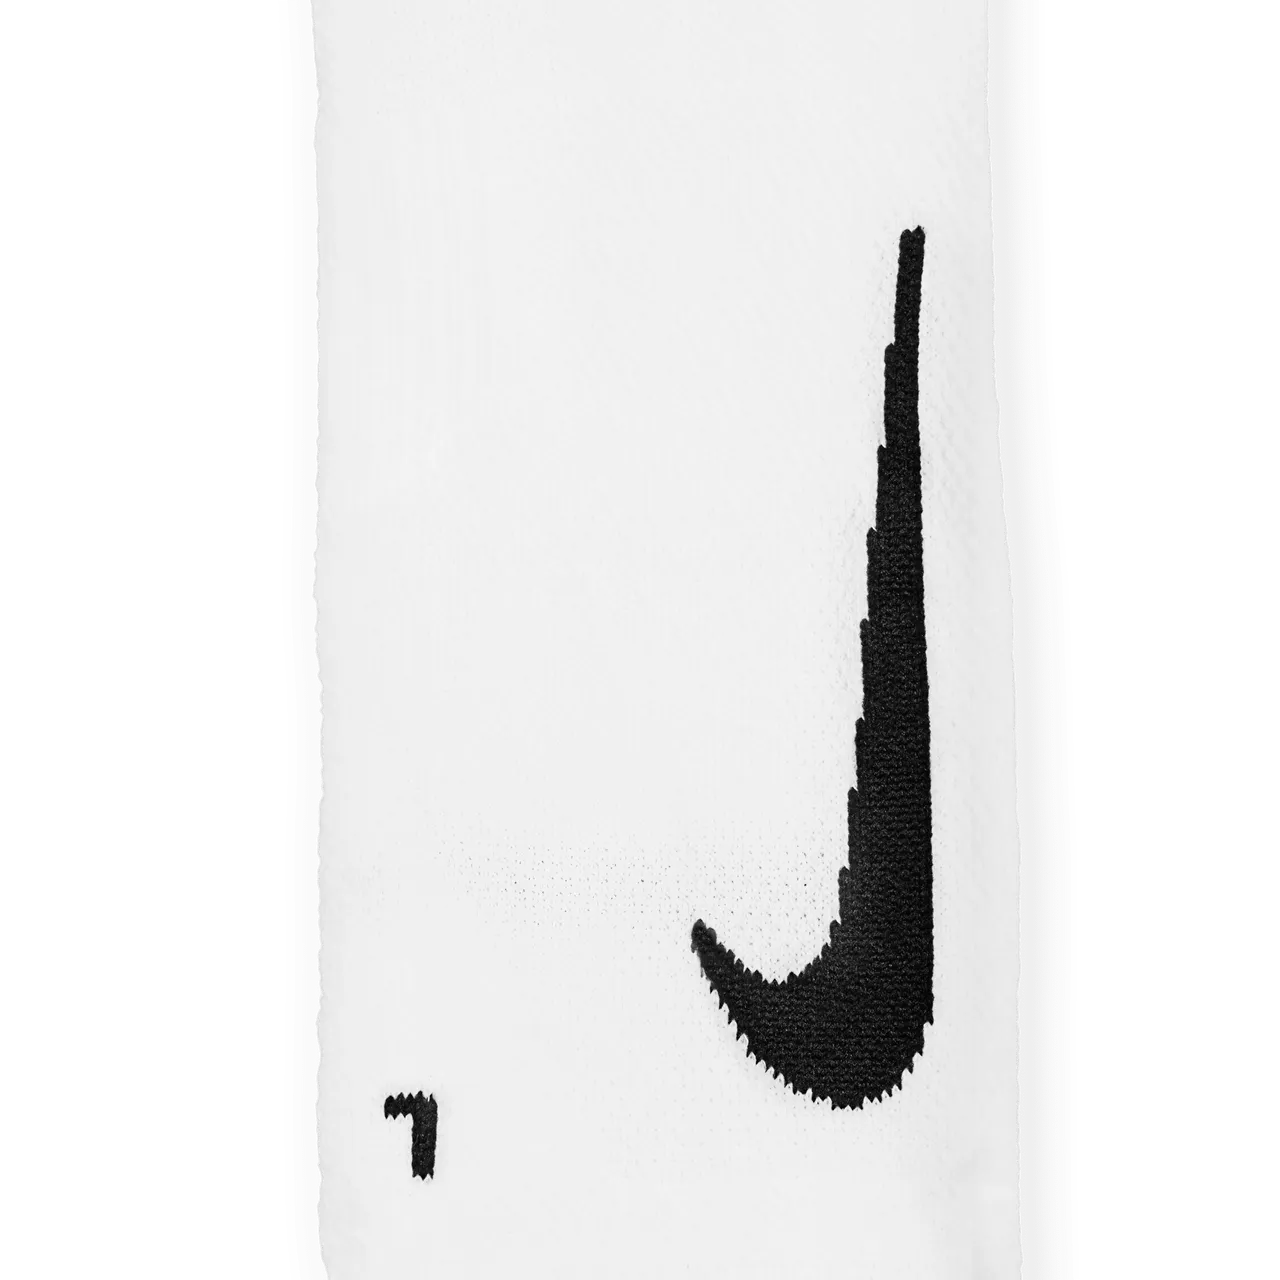 Nike Multiplier Crew Sokken (2 paar) - Wit